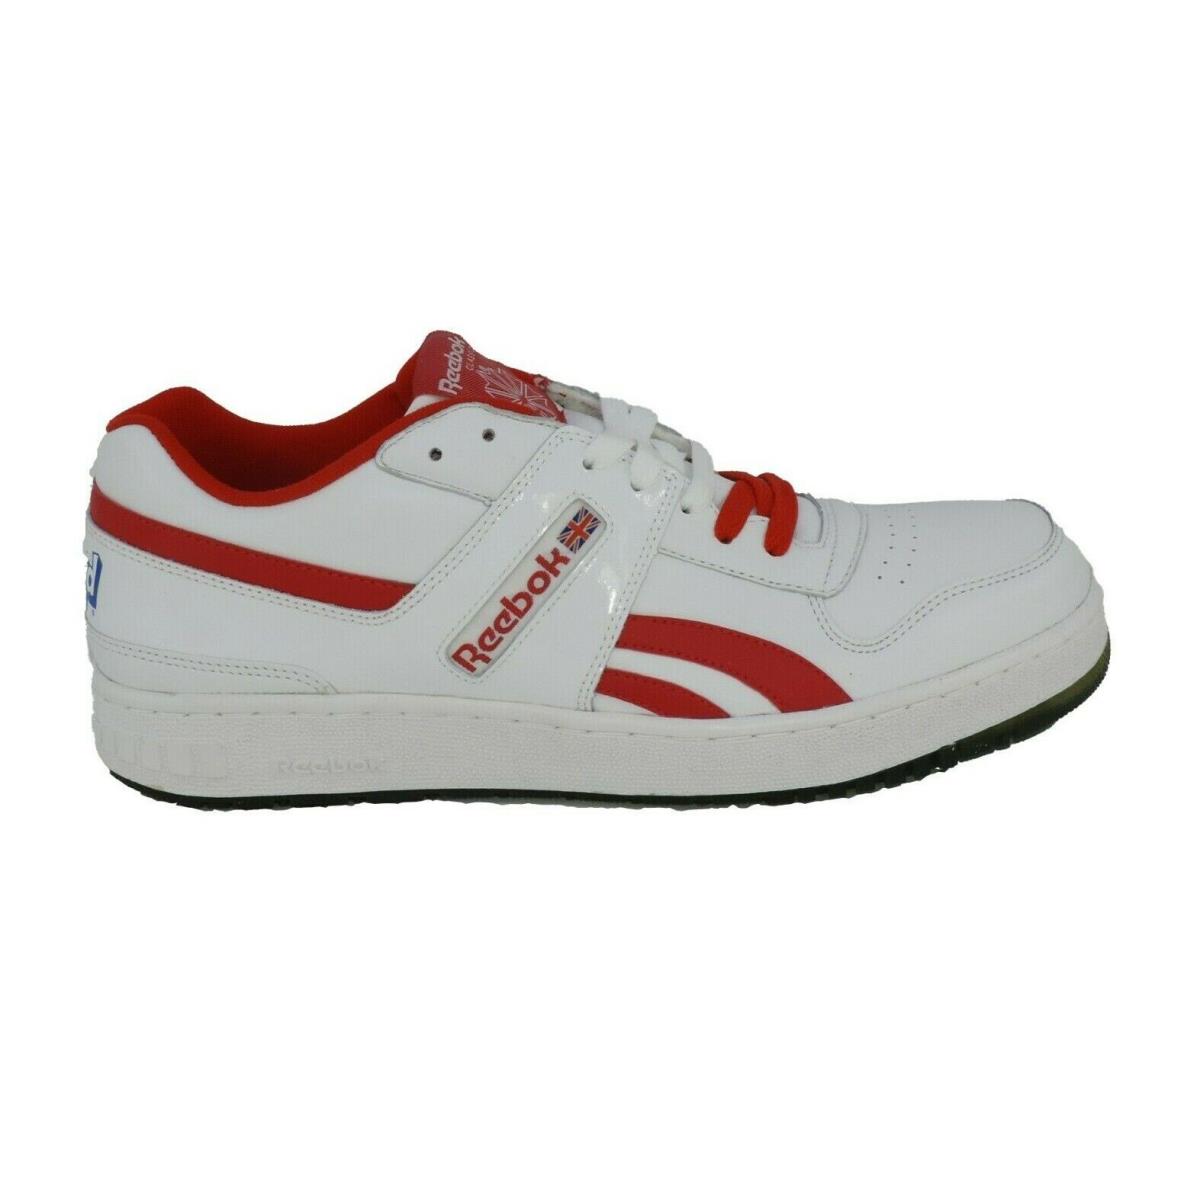 Reebok Pro Legacy Kool Aid 4-711984 Mens Shoes White Red Vintage Sneakers SZ 9